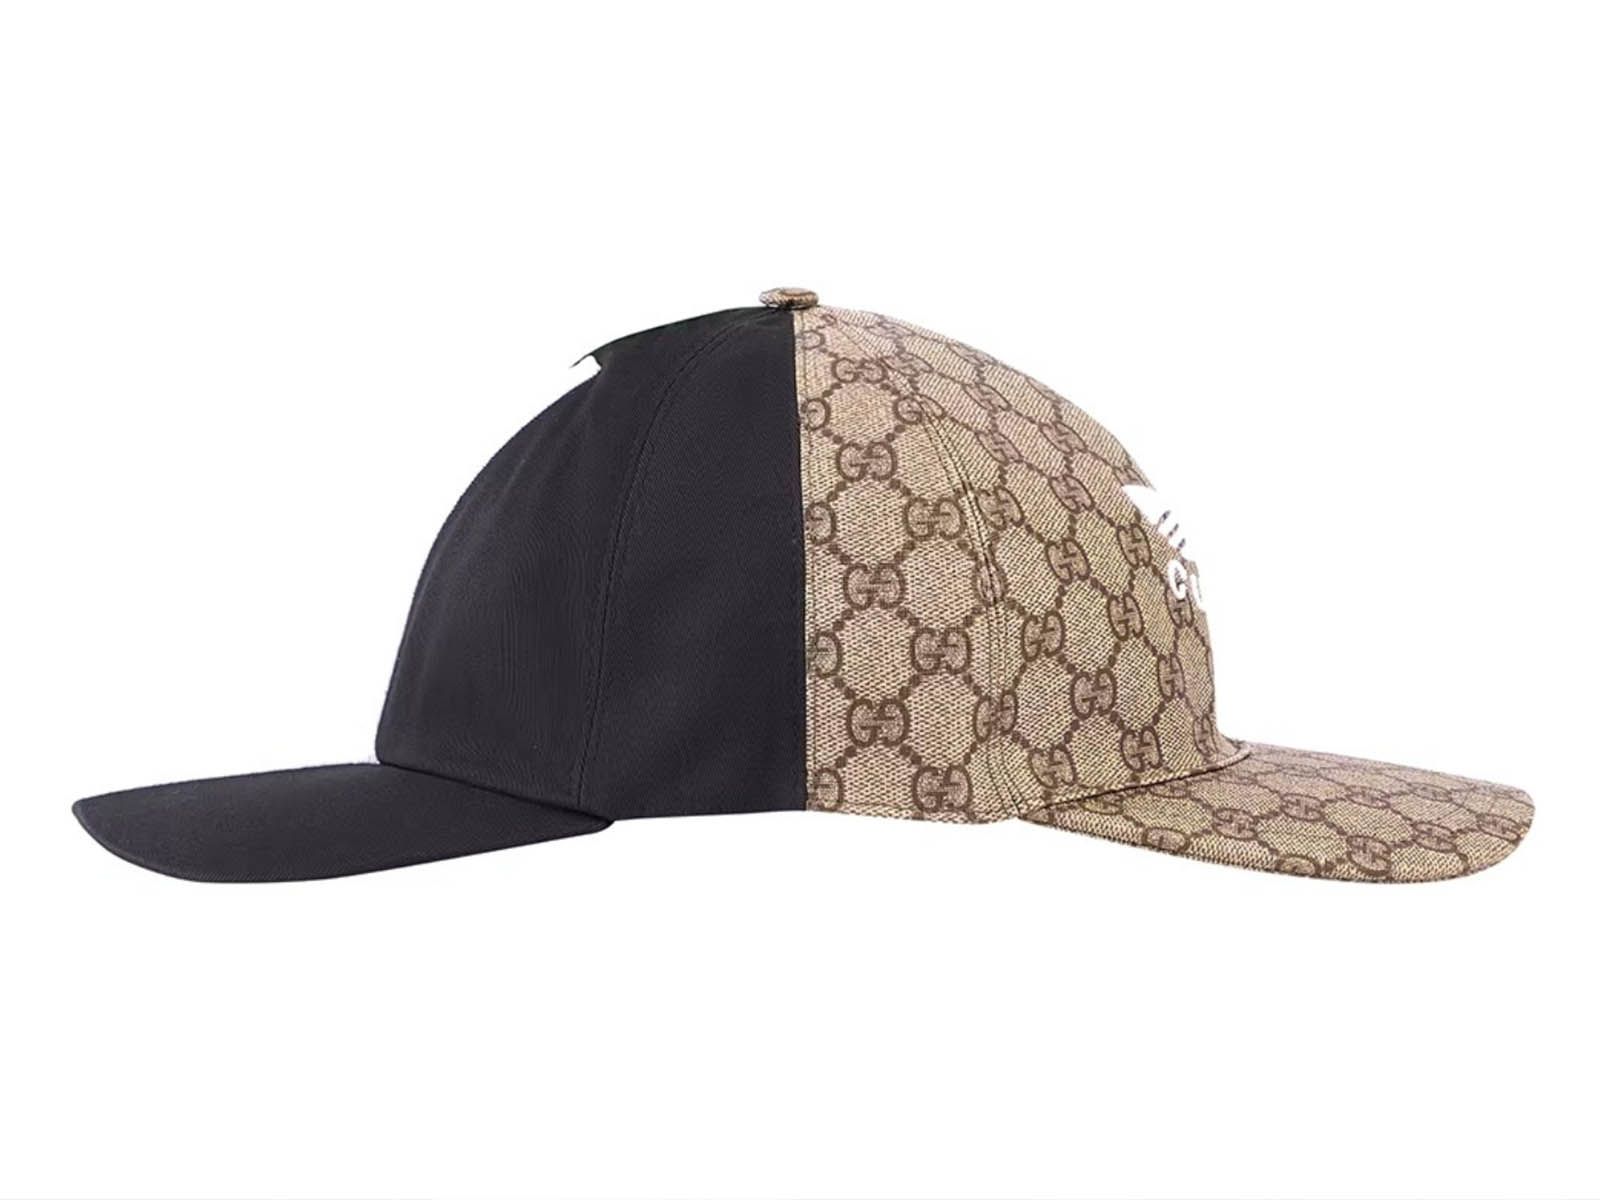 Latest adidas x Gucci launch: double-sided baseball cap - HIGHXTAR.